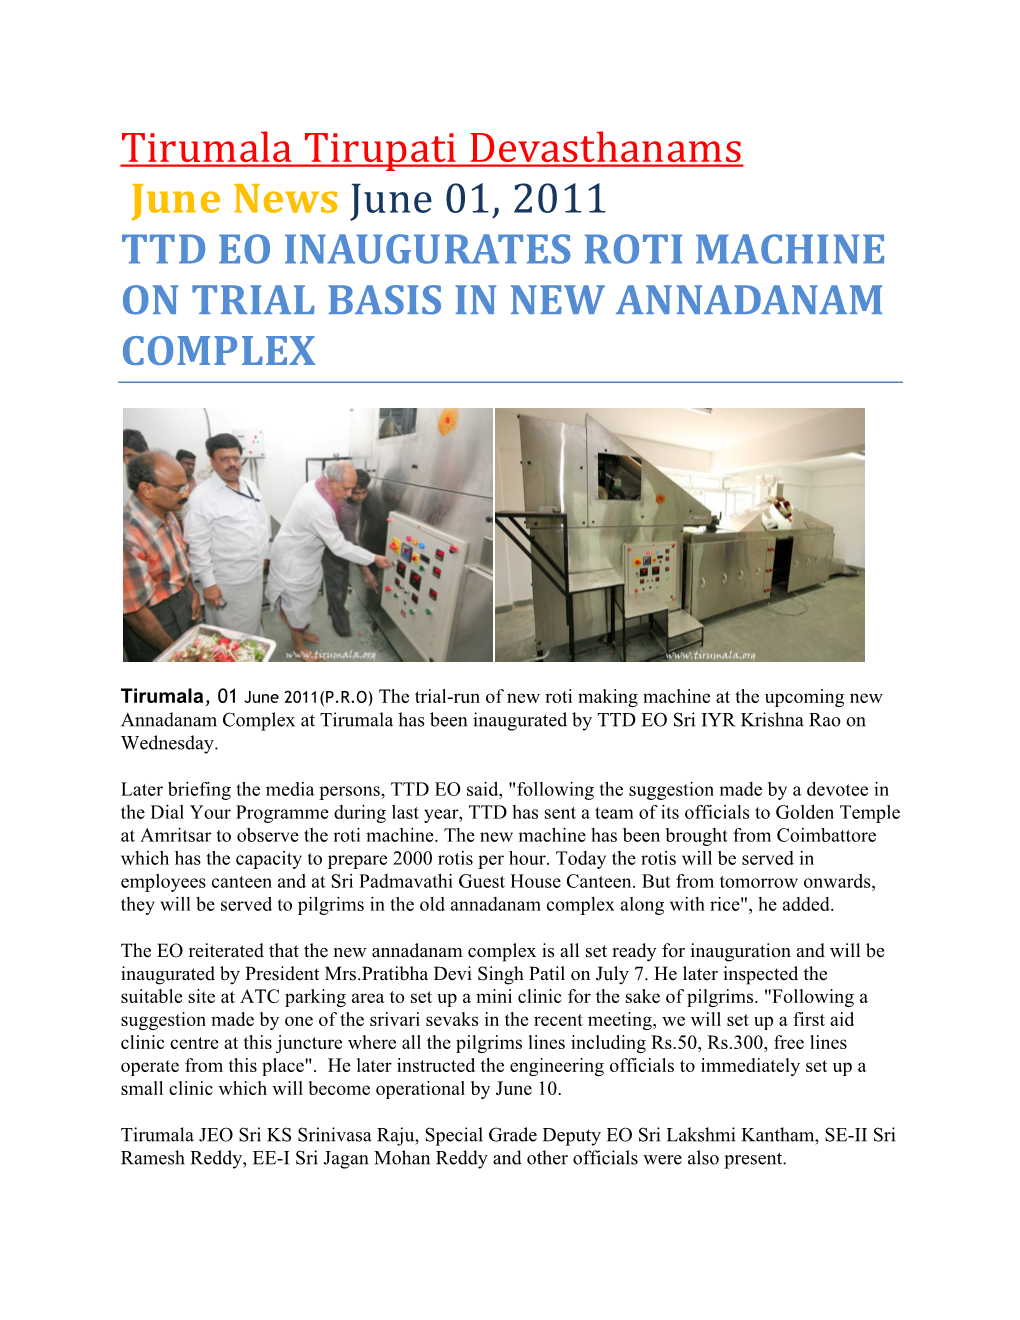 Tirumala Tirupati Devasthanams June News June 01, 2011 TTD EO INAUGURATES ROTI MACHINE on TRIAL BASIS in NEW ANNADANAM COMPLEX